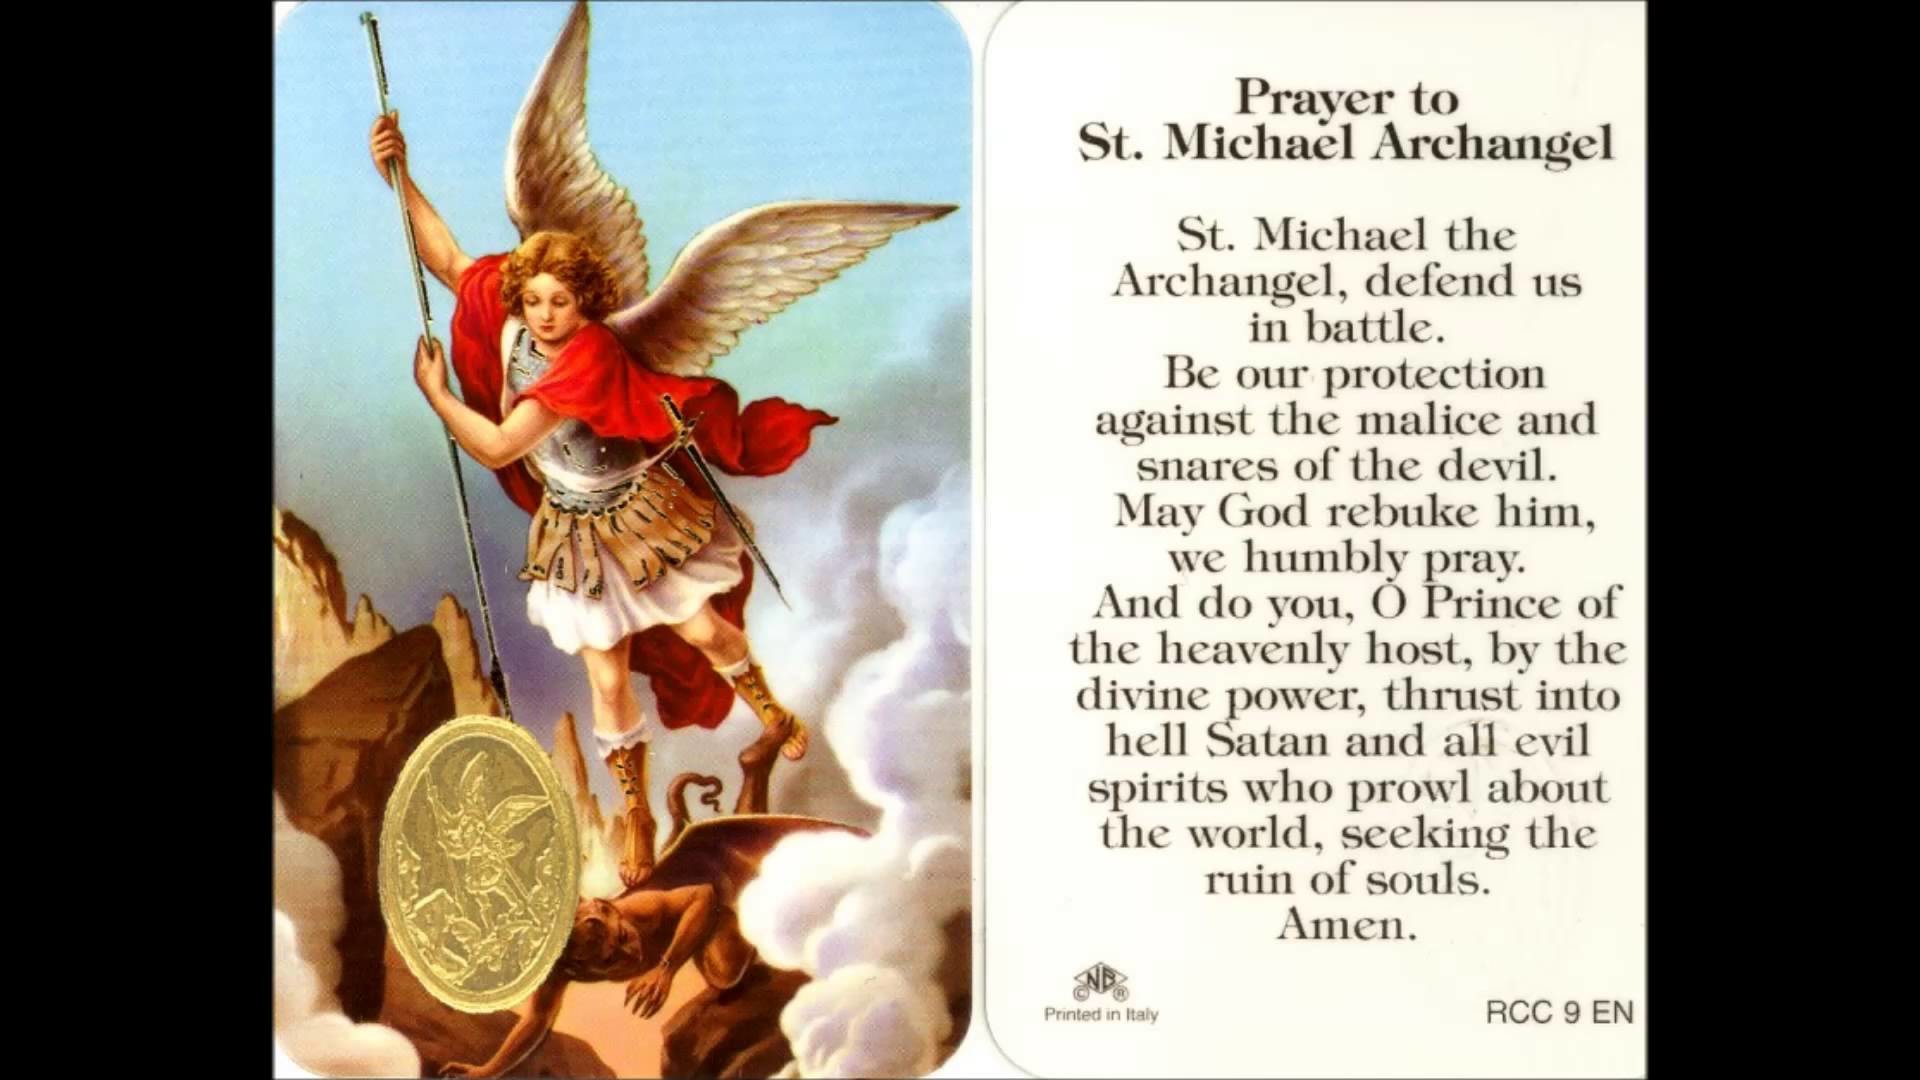 1920x1080 Prayer to St. Michael the Archangel